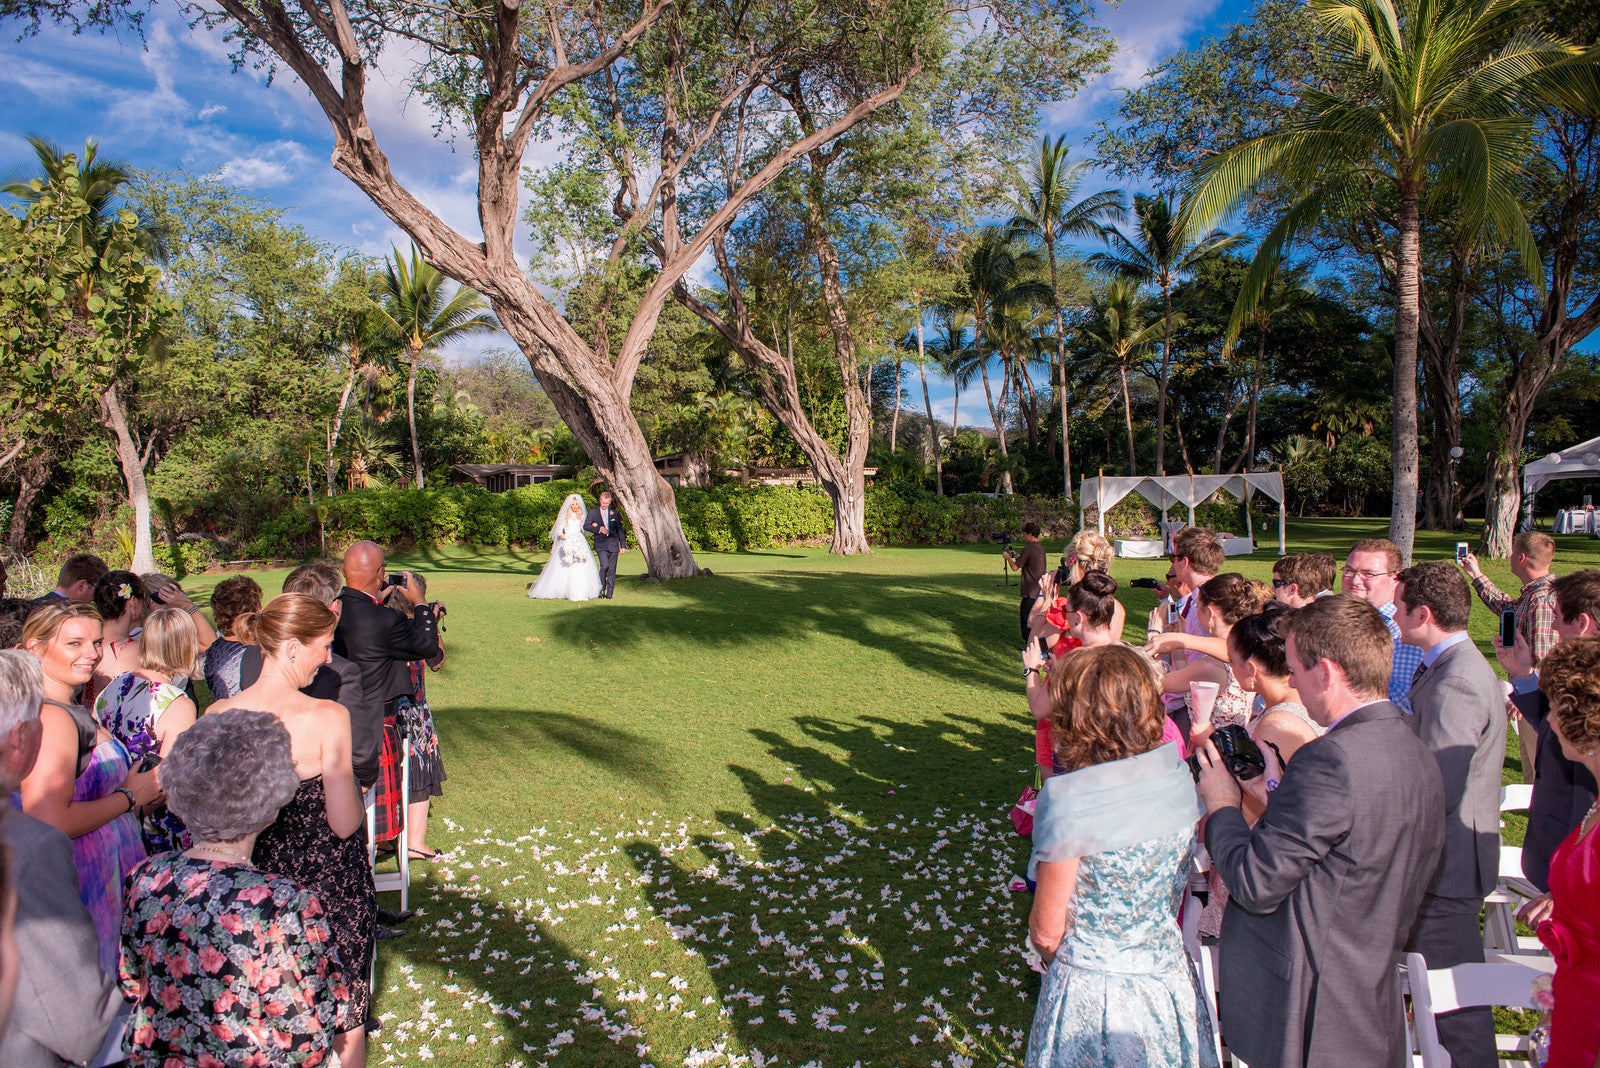 [Maui Elopement & Maui Wedding Photographer Online]-Maui Wedding Photography & Planning Studio, A Paradise Dream Wedding